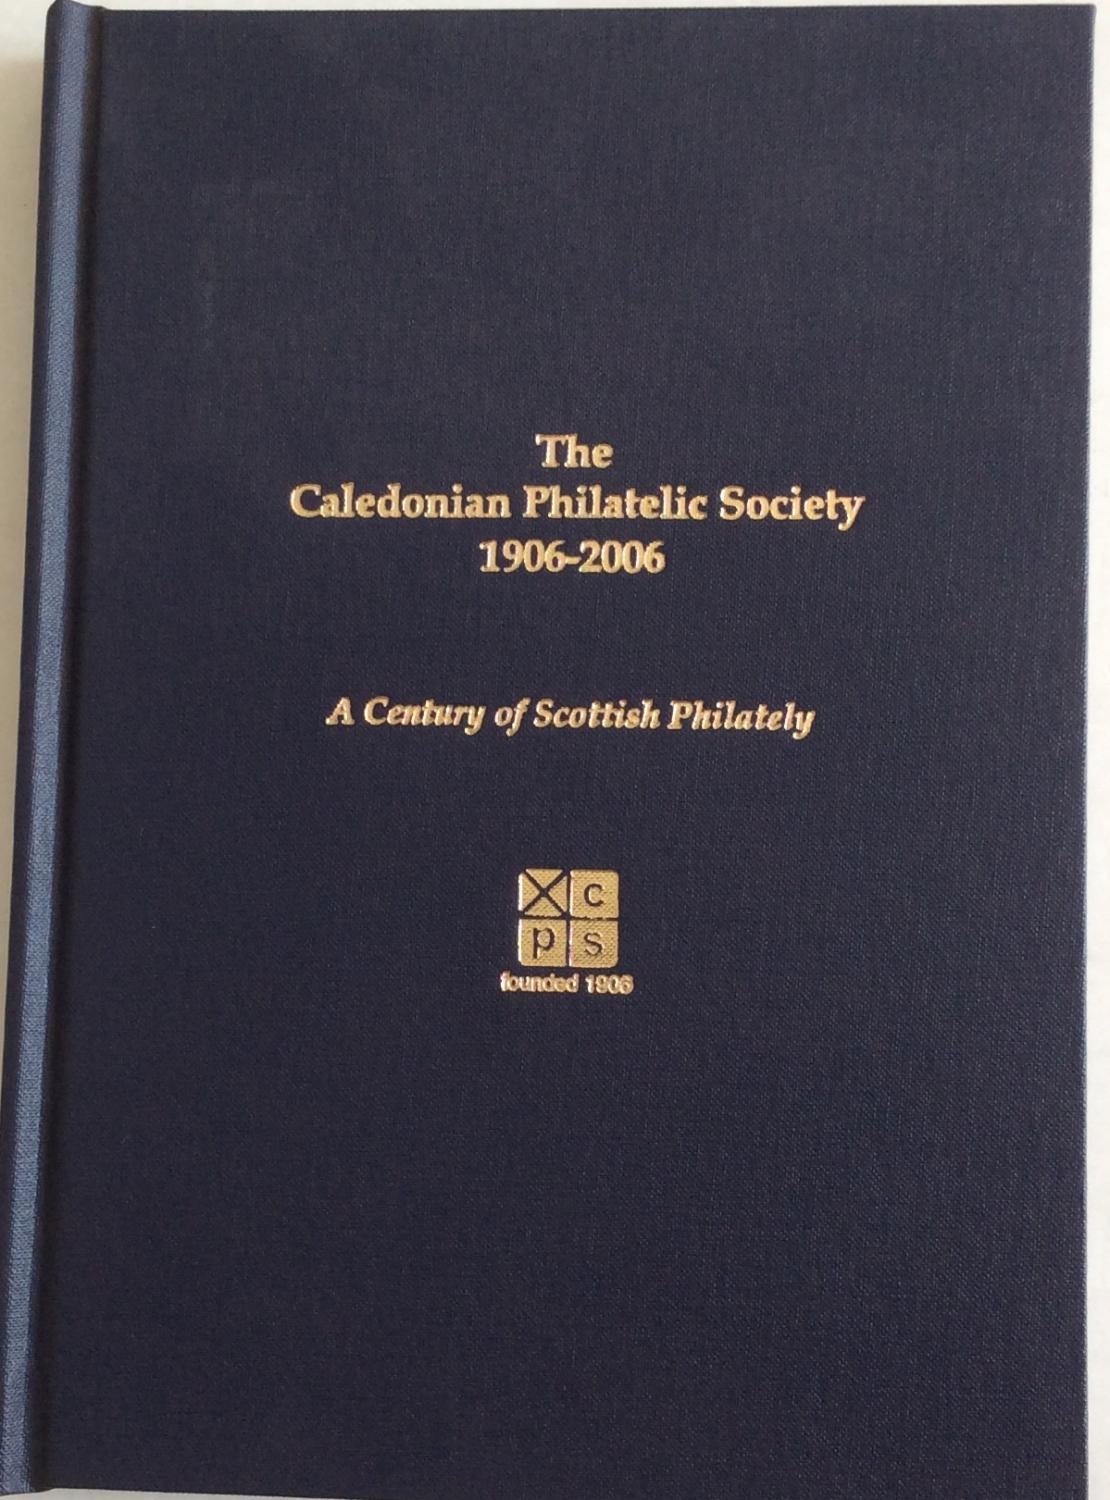 The Caledonian Philatelic Society 1906-2006: A Century of Scottish Philately - Stewart N. Gardiner